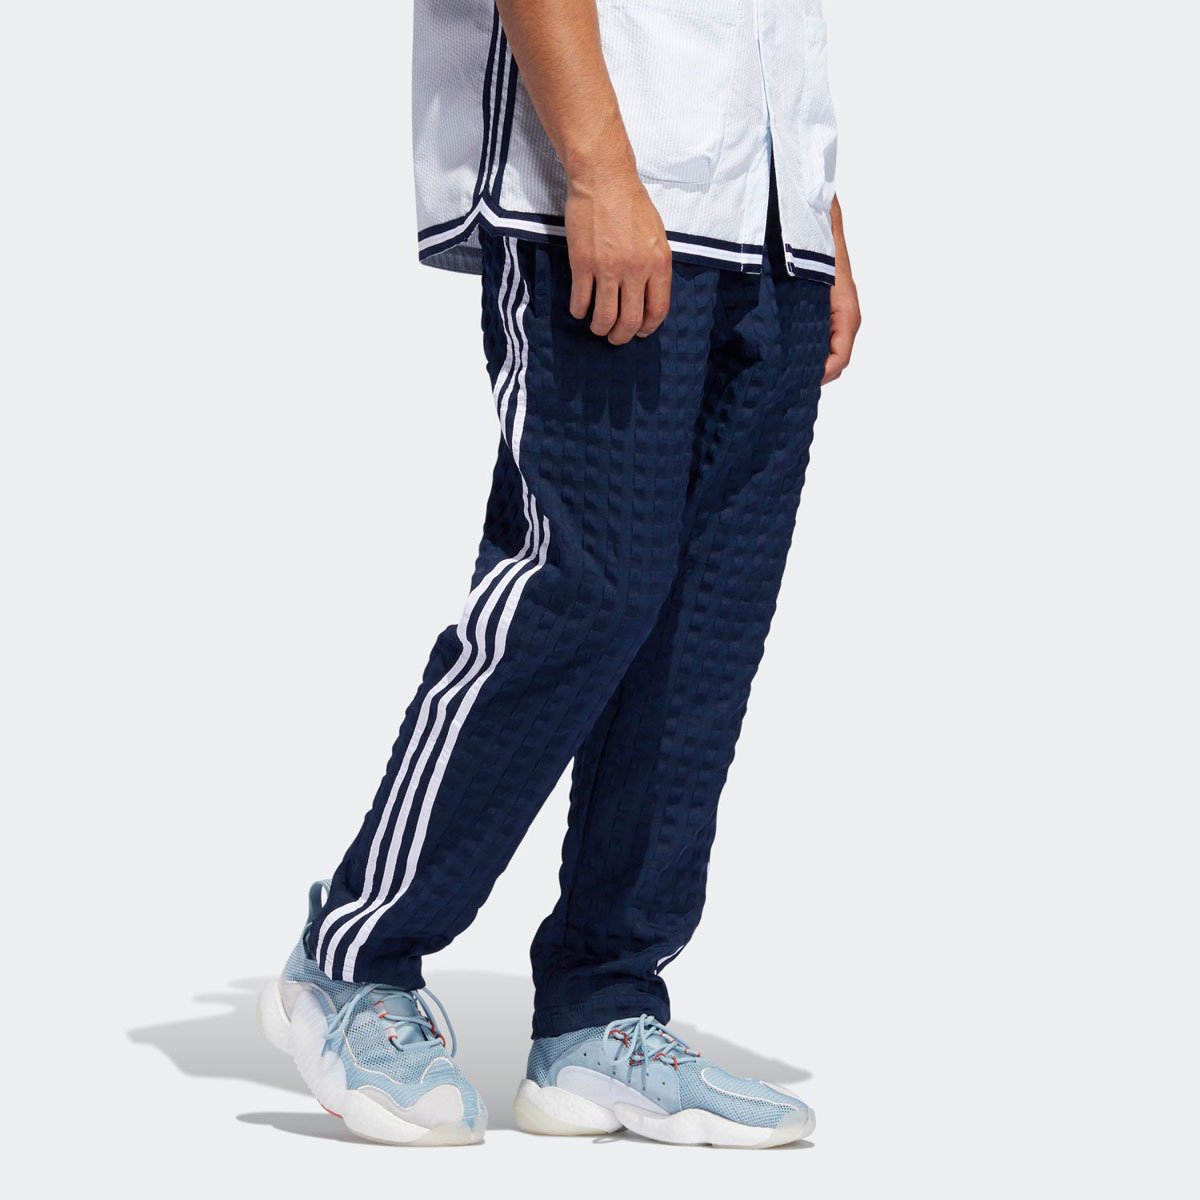 Adidas Originals Superstar штаны